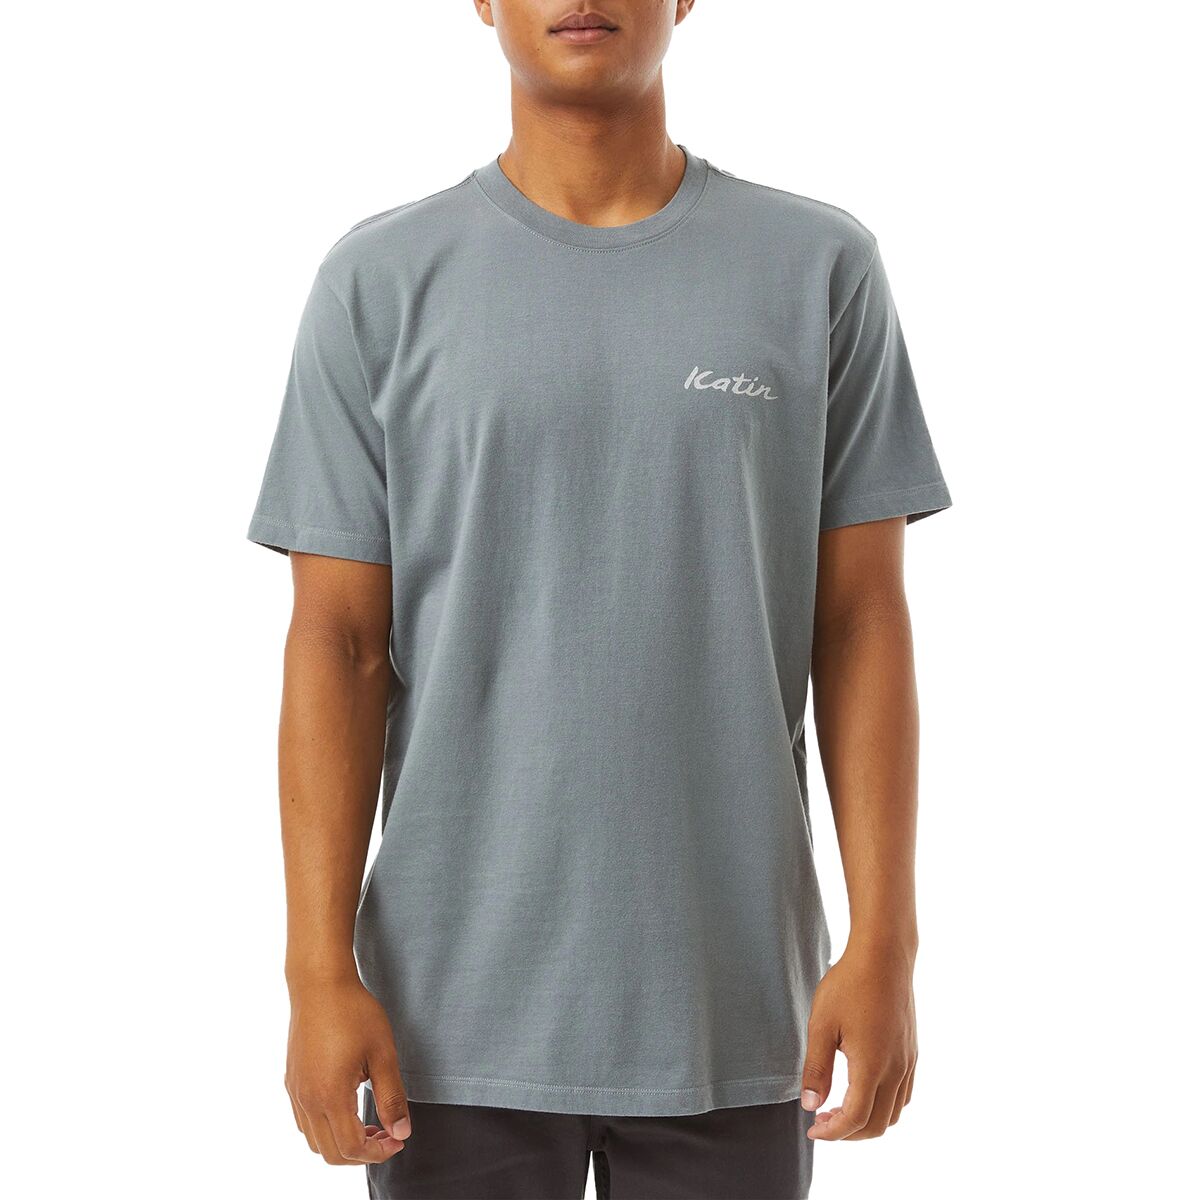 Katin Tropica Short-Sleeve T-Shirt - Men's